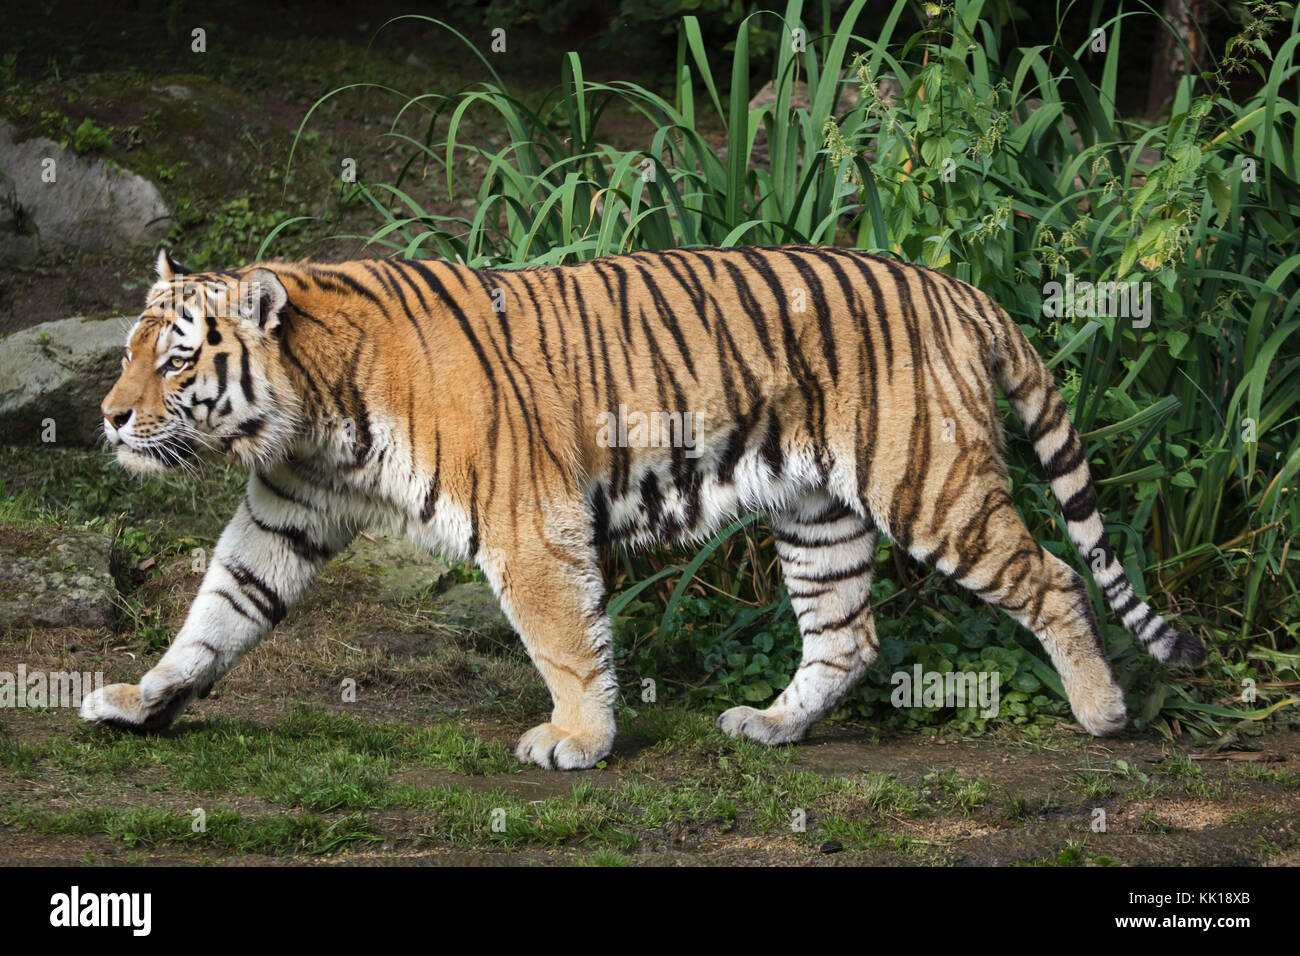 Siberian tiger (Panthera tigris altaica), also known as the Amur tiger. Stock Photo